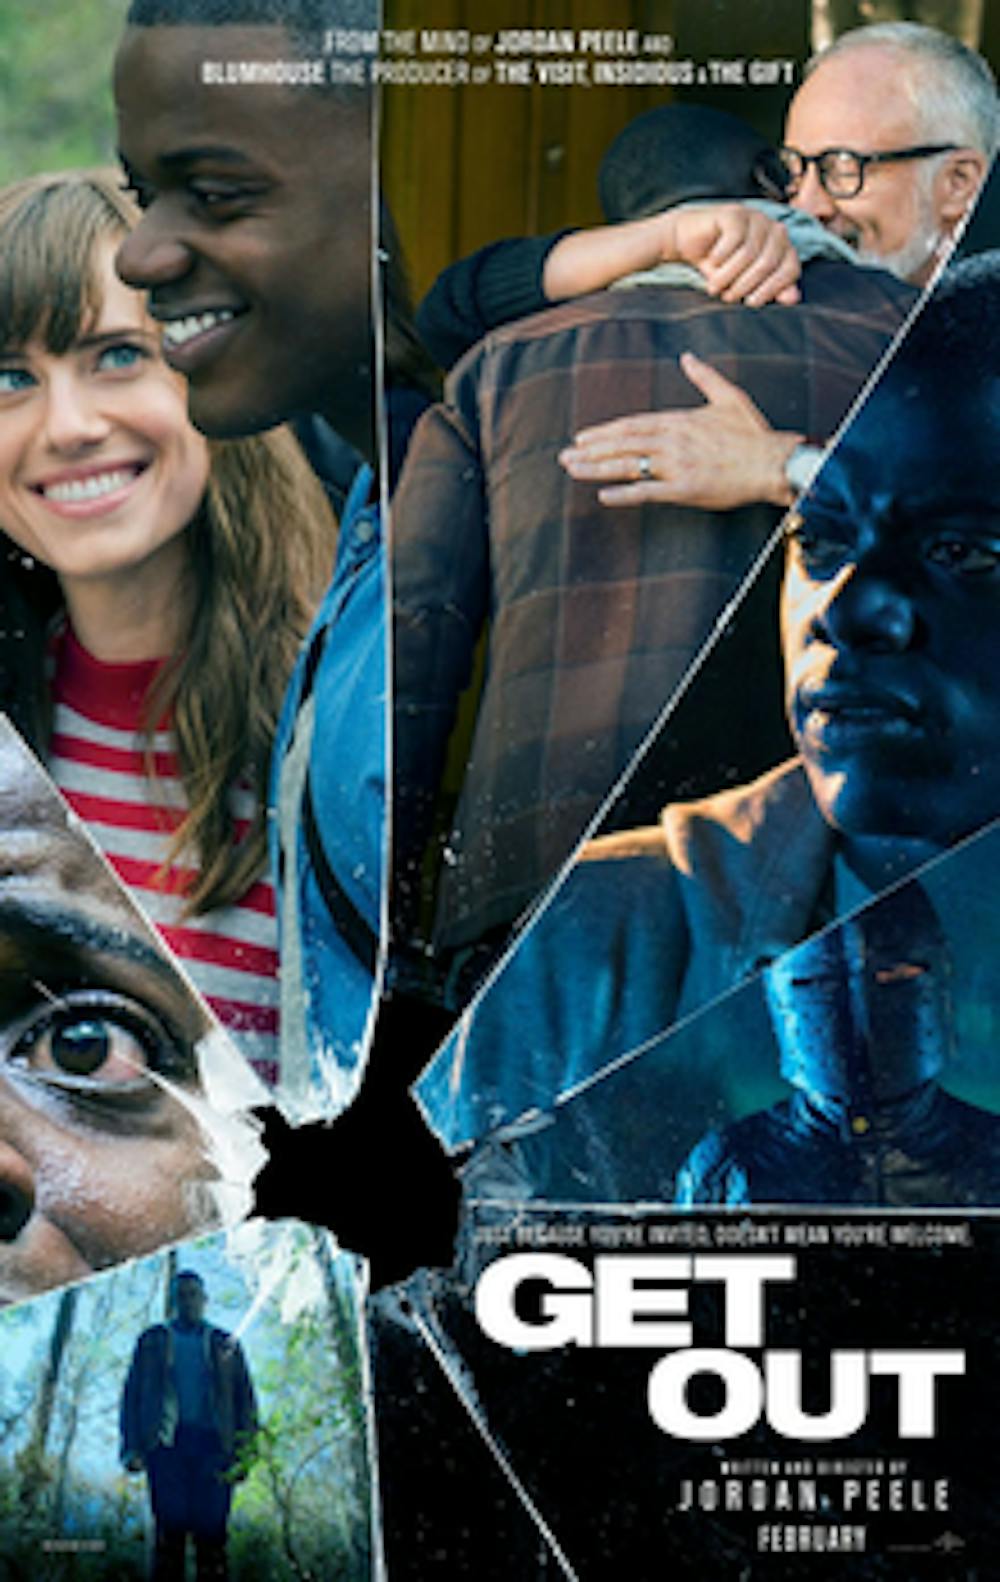 <p>Jordan Peele's directorial debut&nbsp;"Get Out" explores resonant themes of race.</p>